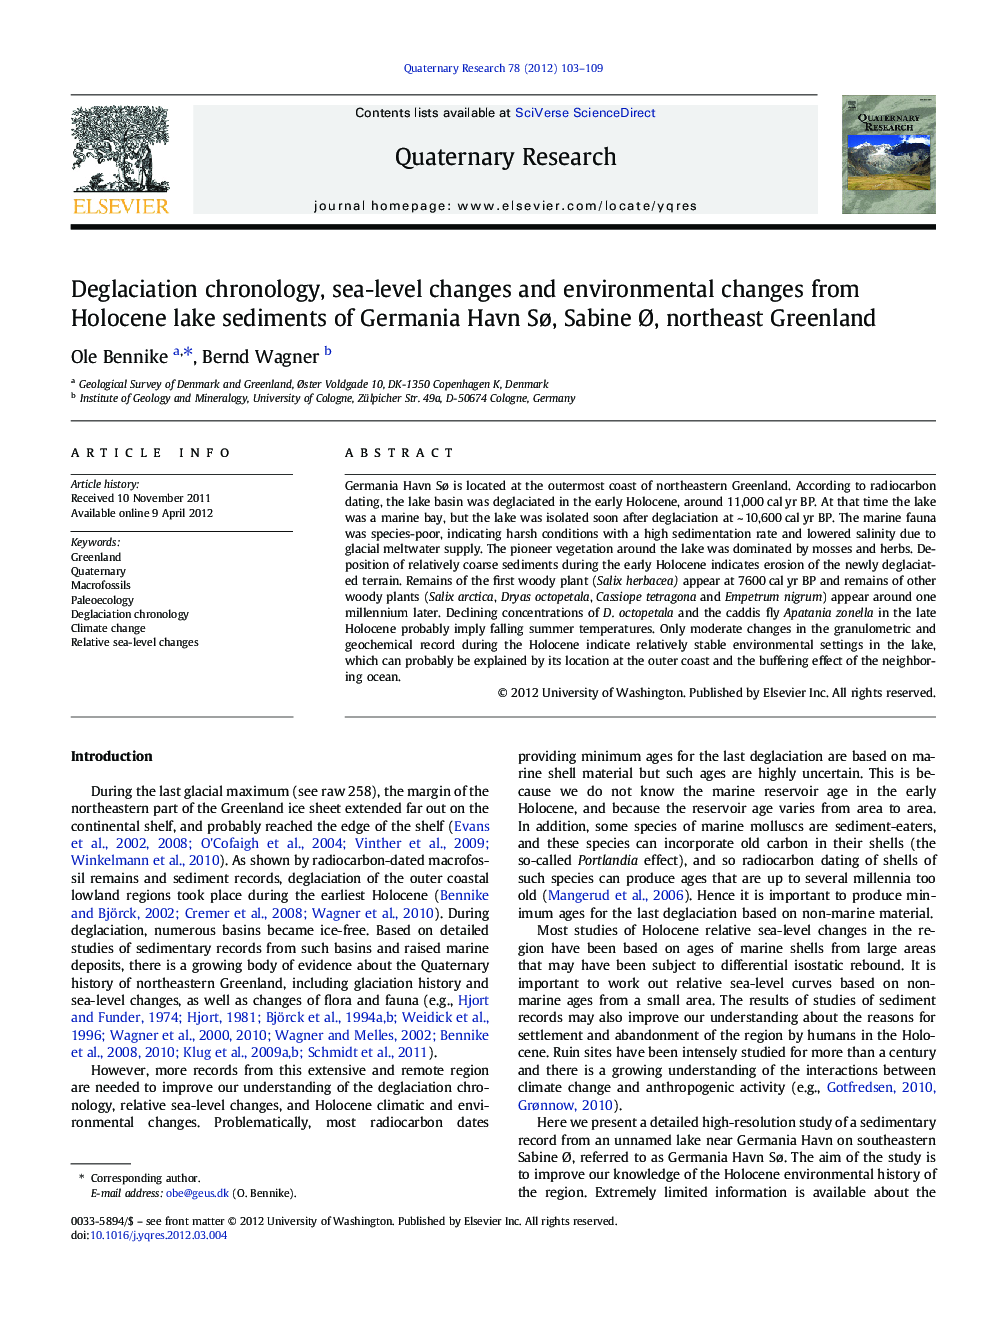 Deglaciation chronology, sea-level changes and environmental changes from Holocene lake sediments of Germania Havn Sø, Sabine Ø, northeast Greenland